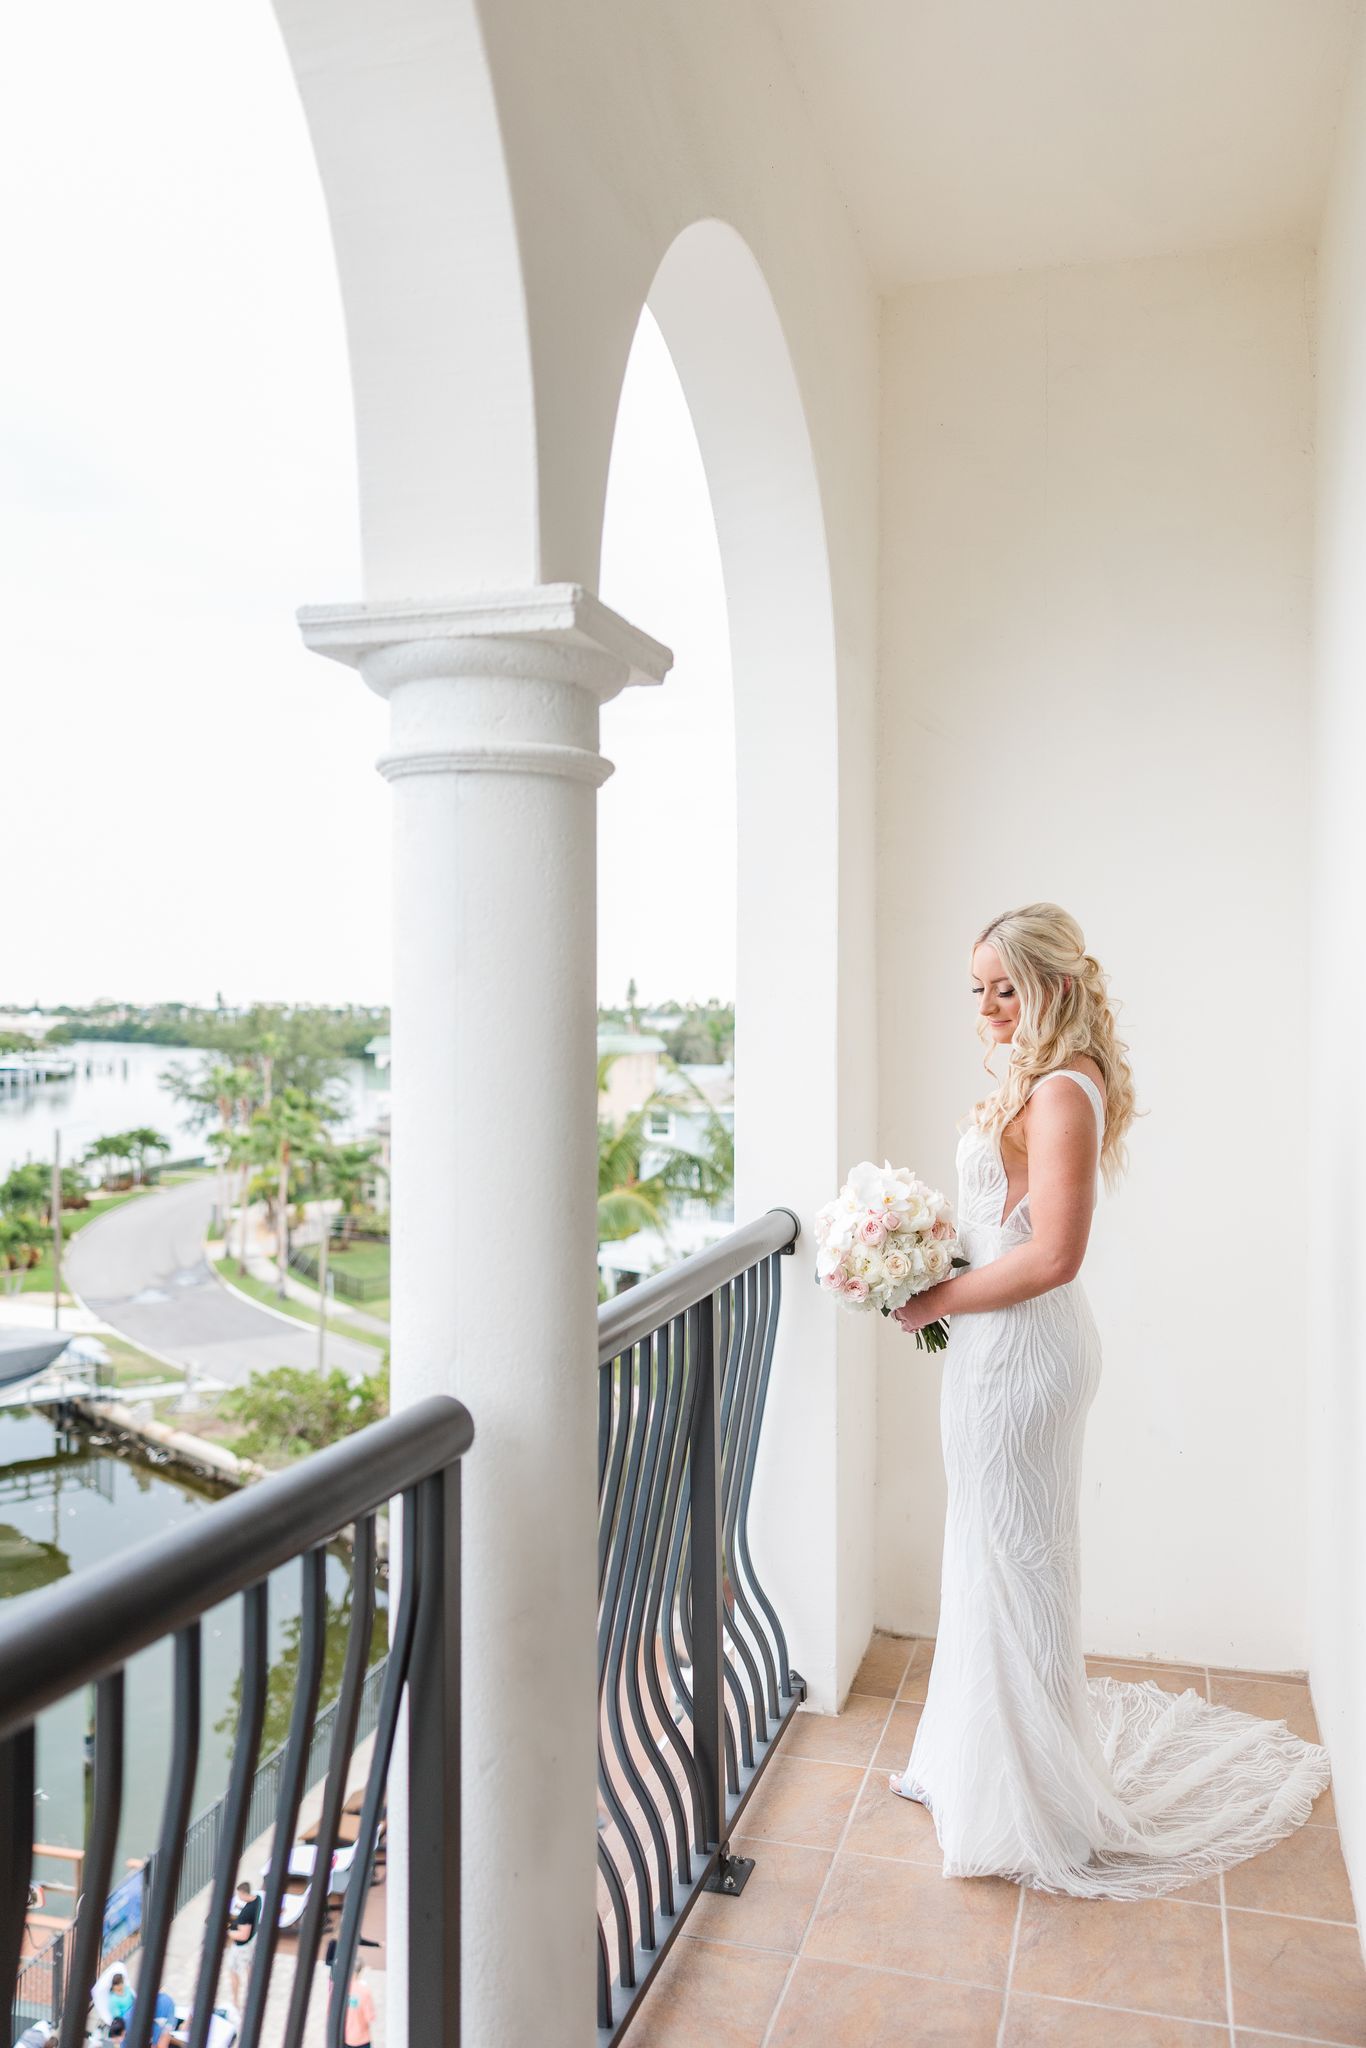 Pretty bride in her wedding dress standing on hotel balcony